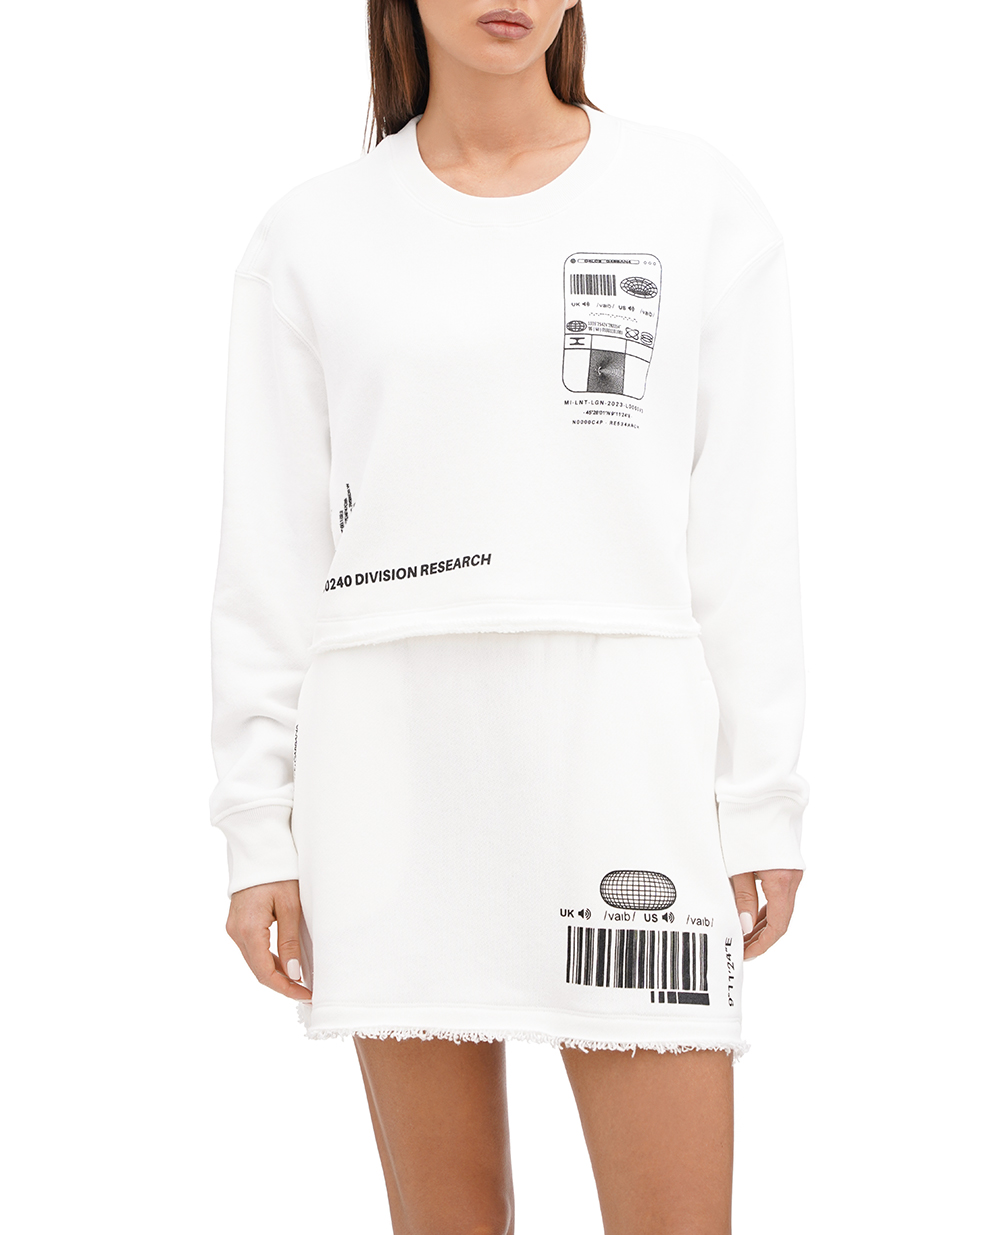 Свитшот DGVIB3 (костюм) Dolce&Gabbana F9R41T-G7K6T, белый цвет • Купить в интернет-магазине Kameron